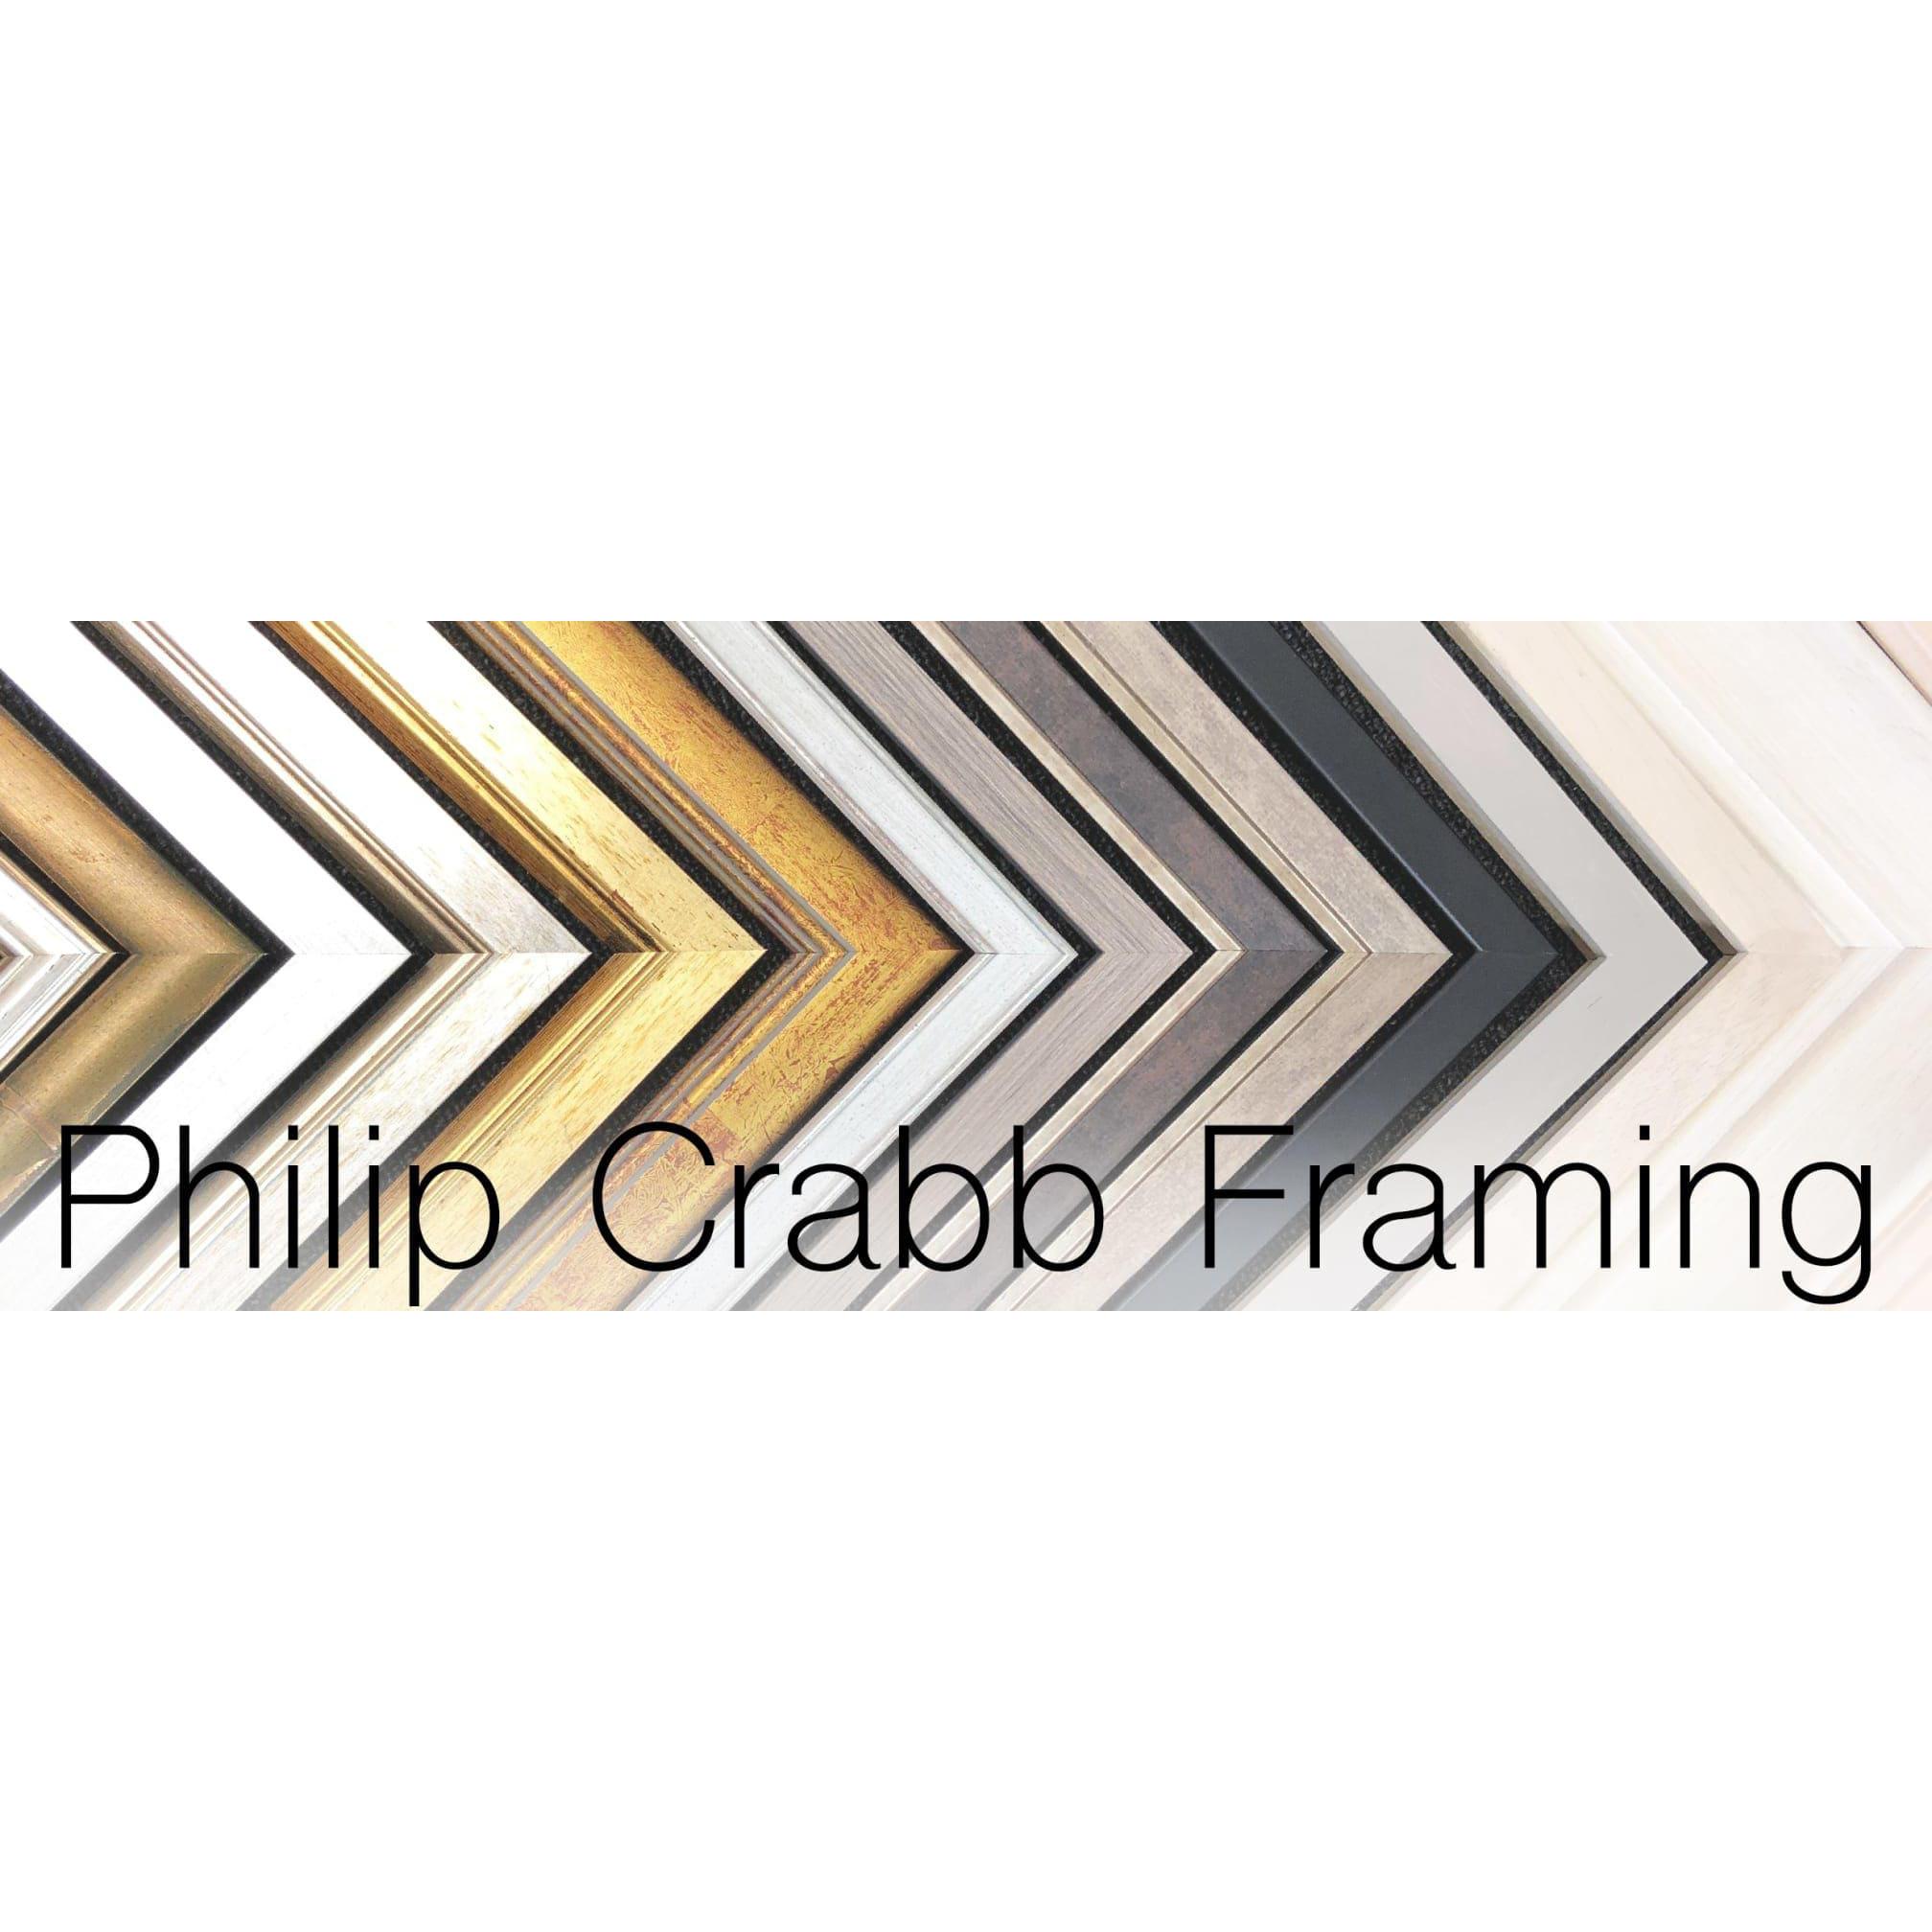 Philip Crabb Framing - Dundee, Angus DD5 2NB - 07841 561906 | ShowMeLocal.com